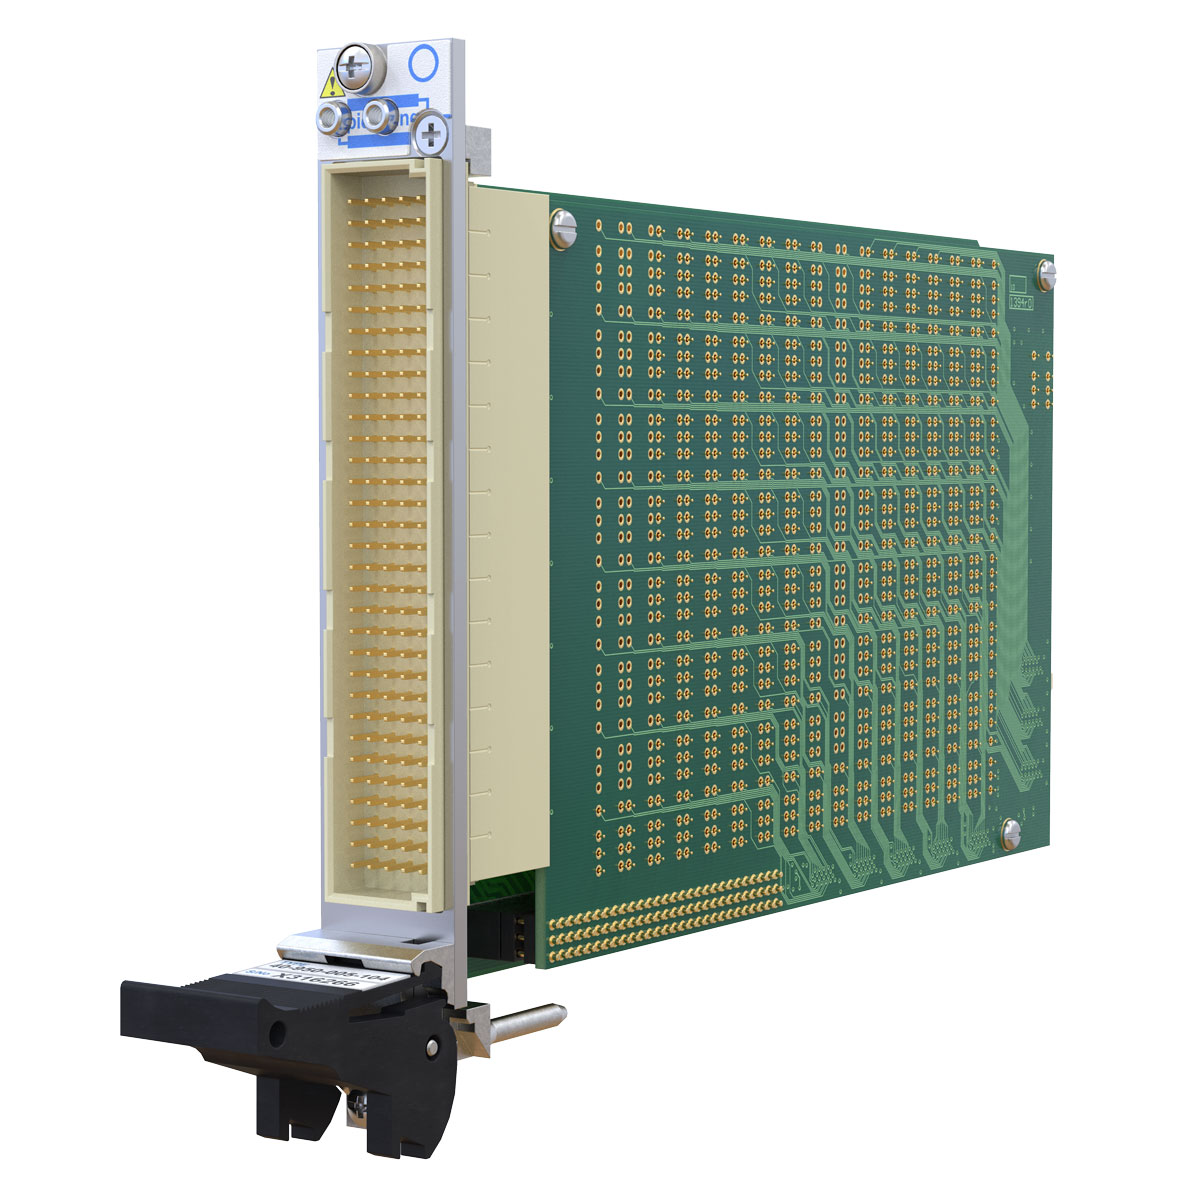 40-619 PXI Monitored Multiplexer Module